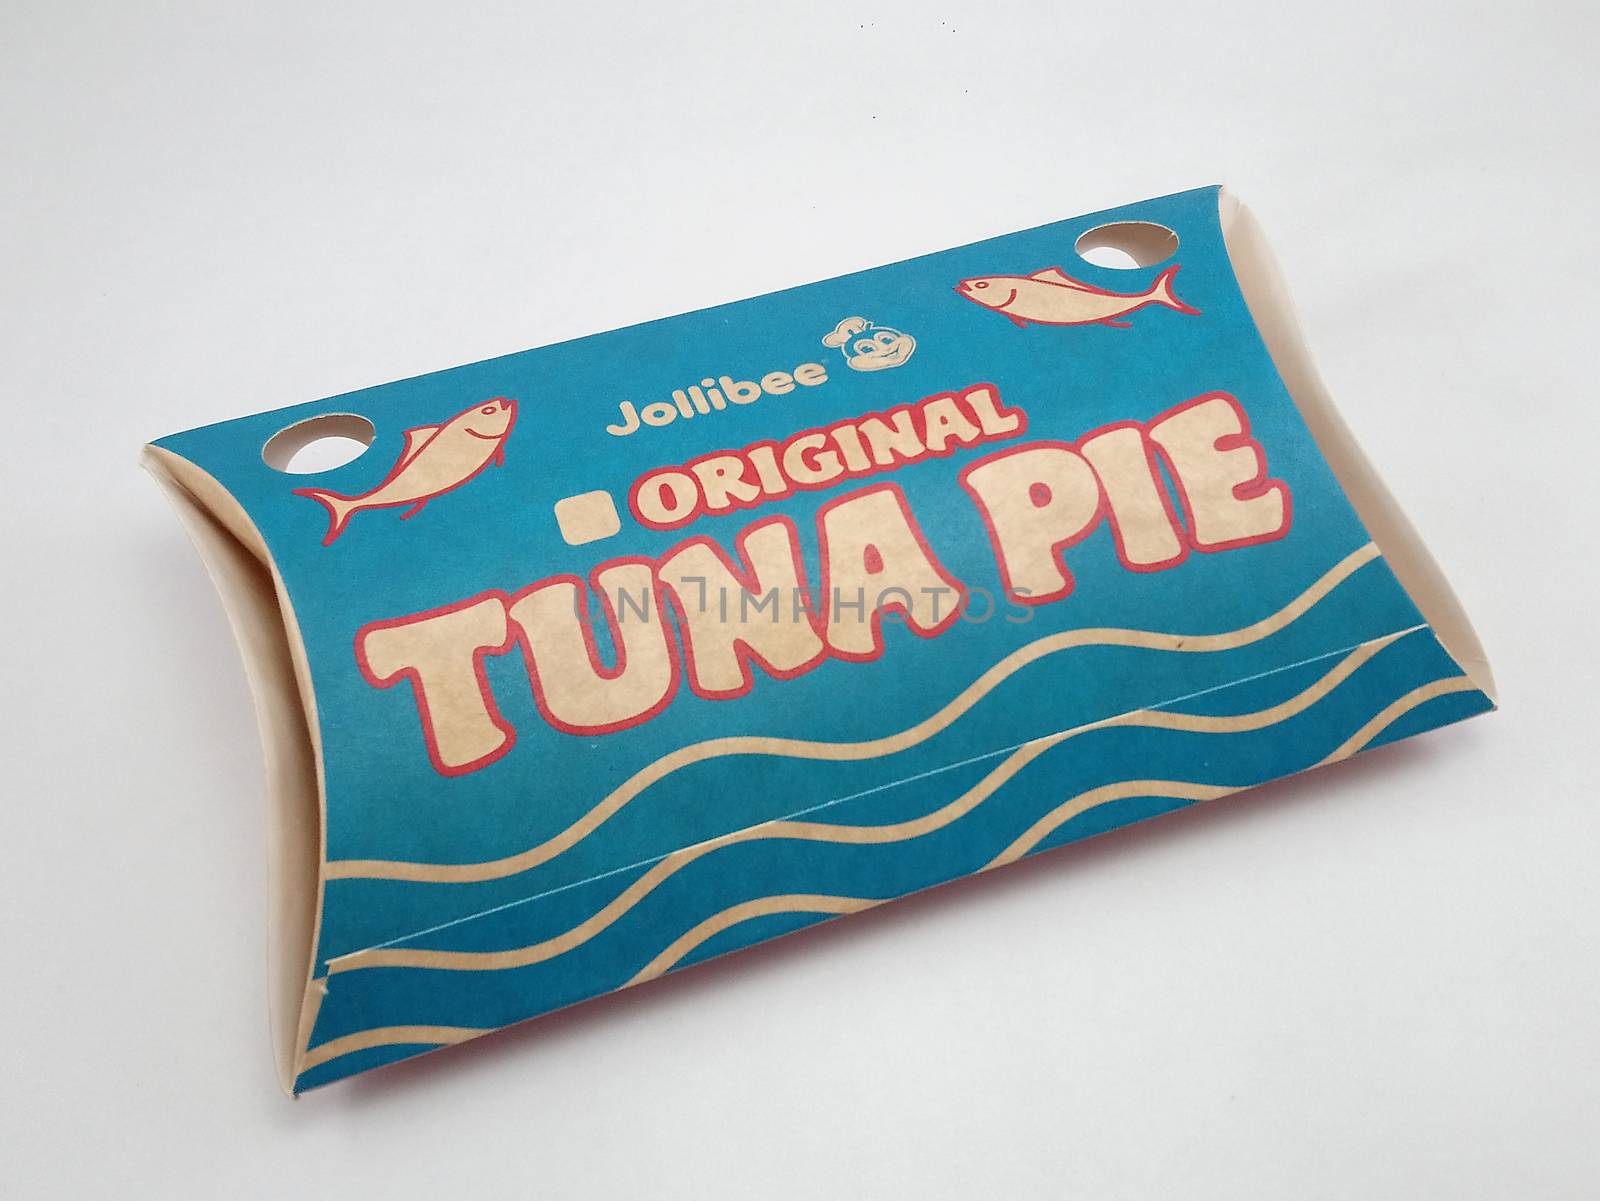 MANILA, PH - SEPT 22 - Jollibee original tuna pie on September 22, 2020 in Manila, Philippines.